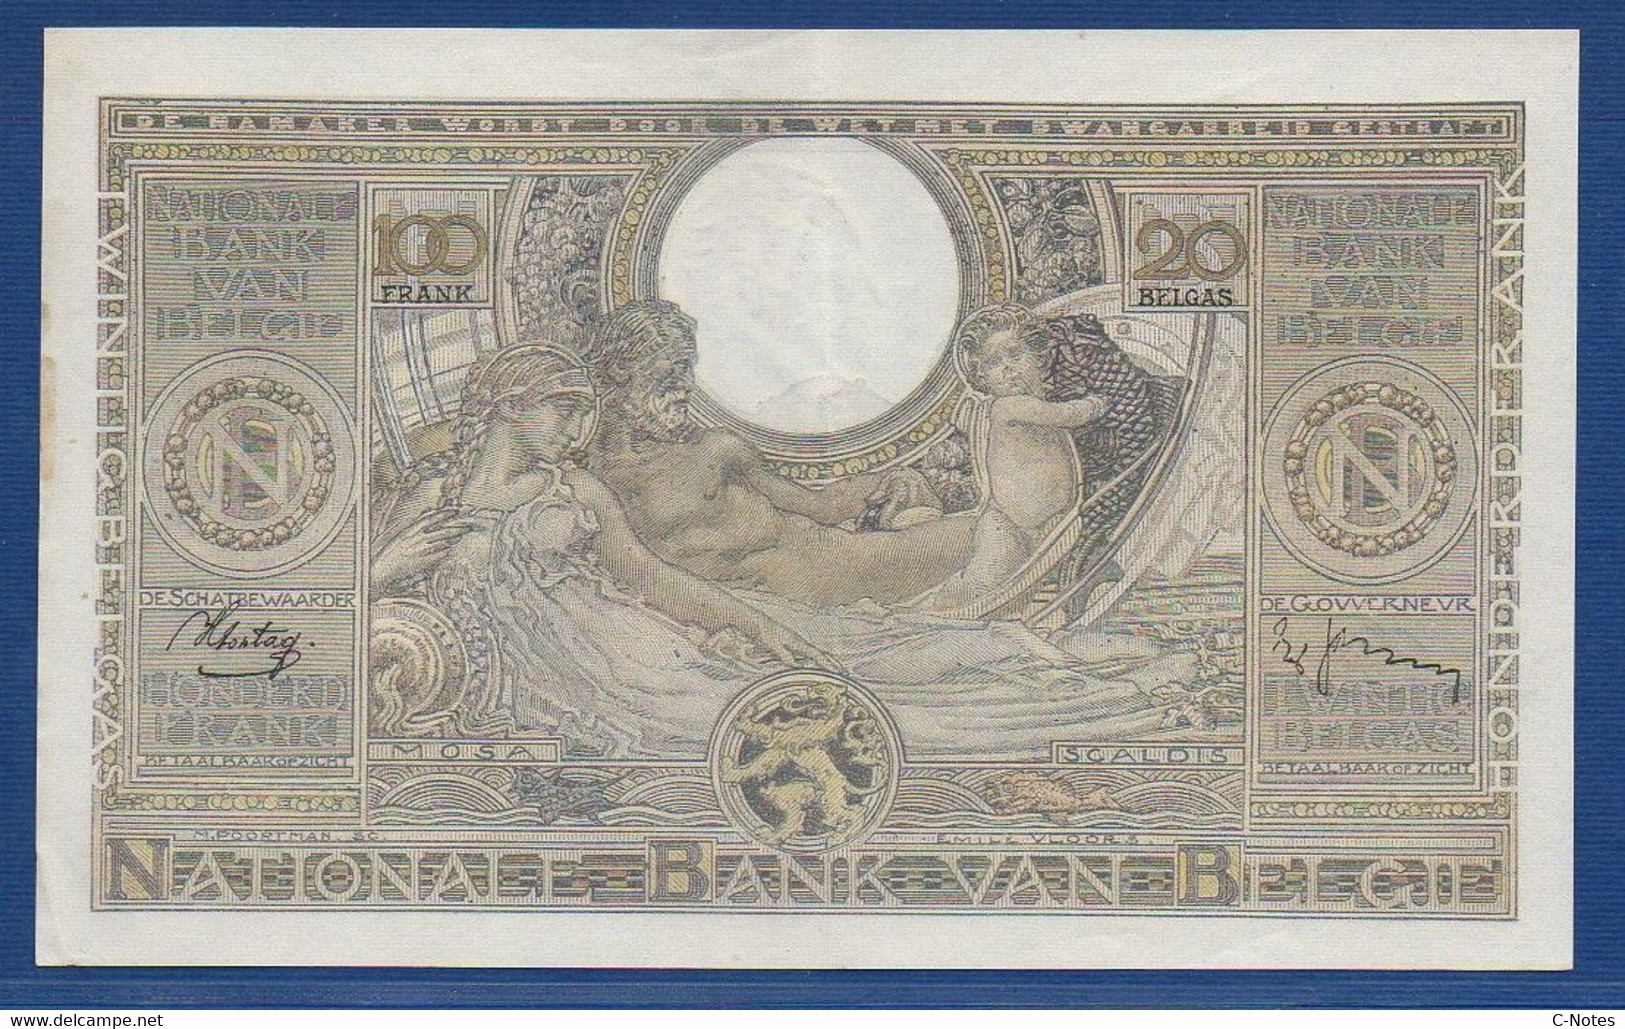 BELGIUM - P.107a(3) - 100 Francs / Frank = 20 Belgas 21.02.1938 XF+, Serie 3456.A.711 - 100 Francs & 100 Francs-20 Belgas